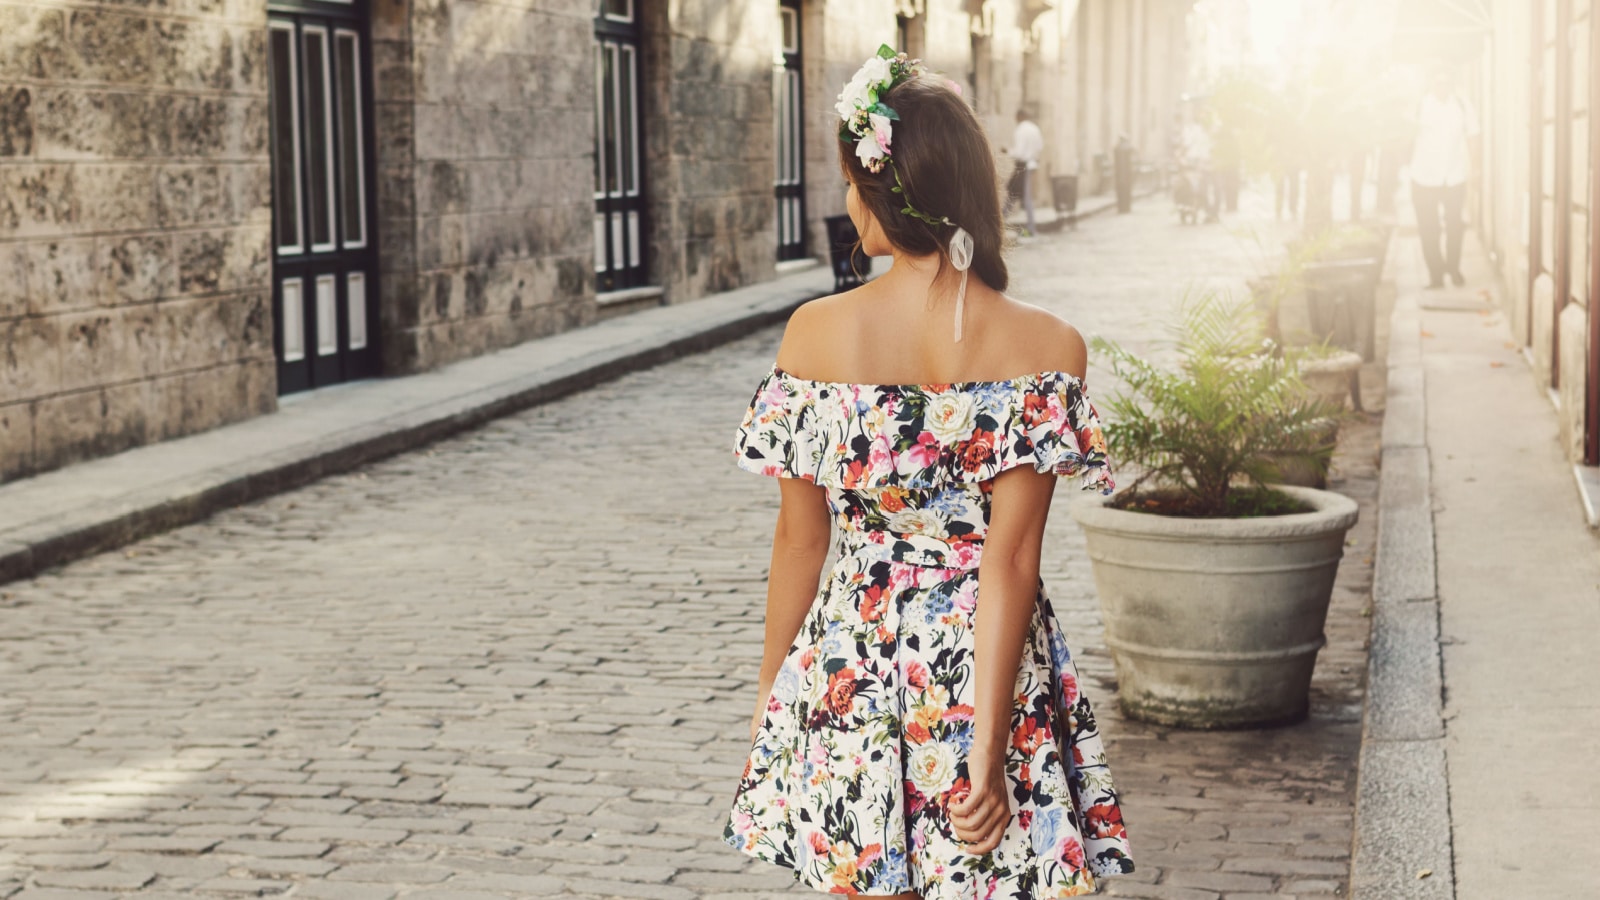 Happy woman in beautiful floral dress on the street of Havana city